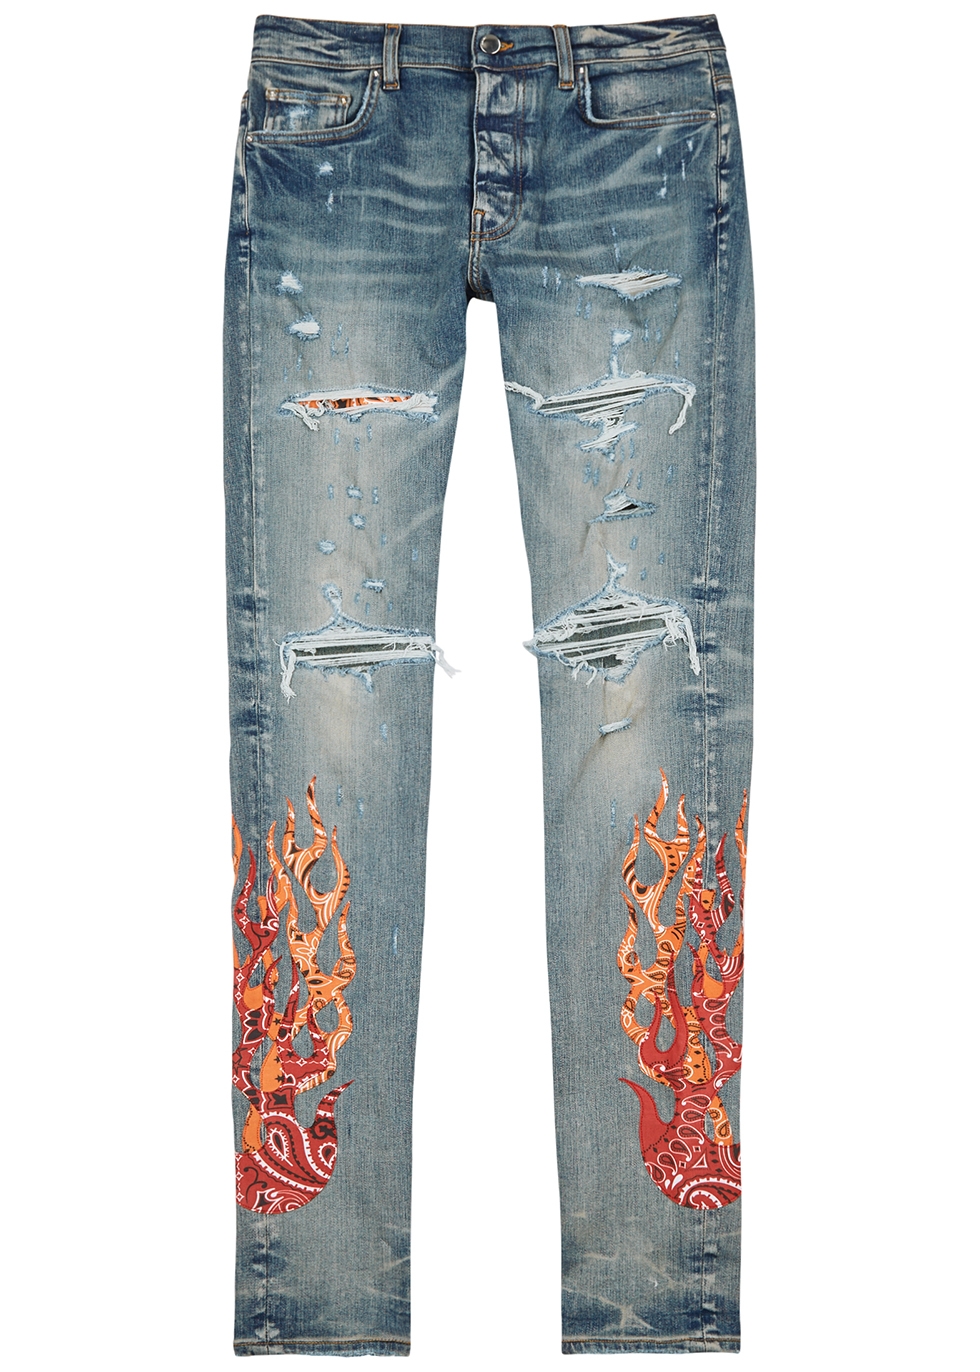 Bandana Flame distressed skinny jeans